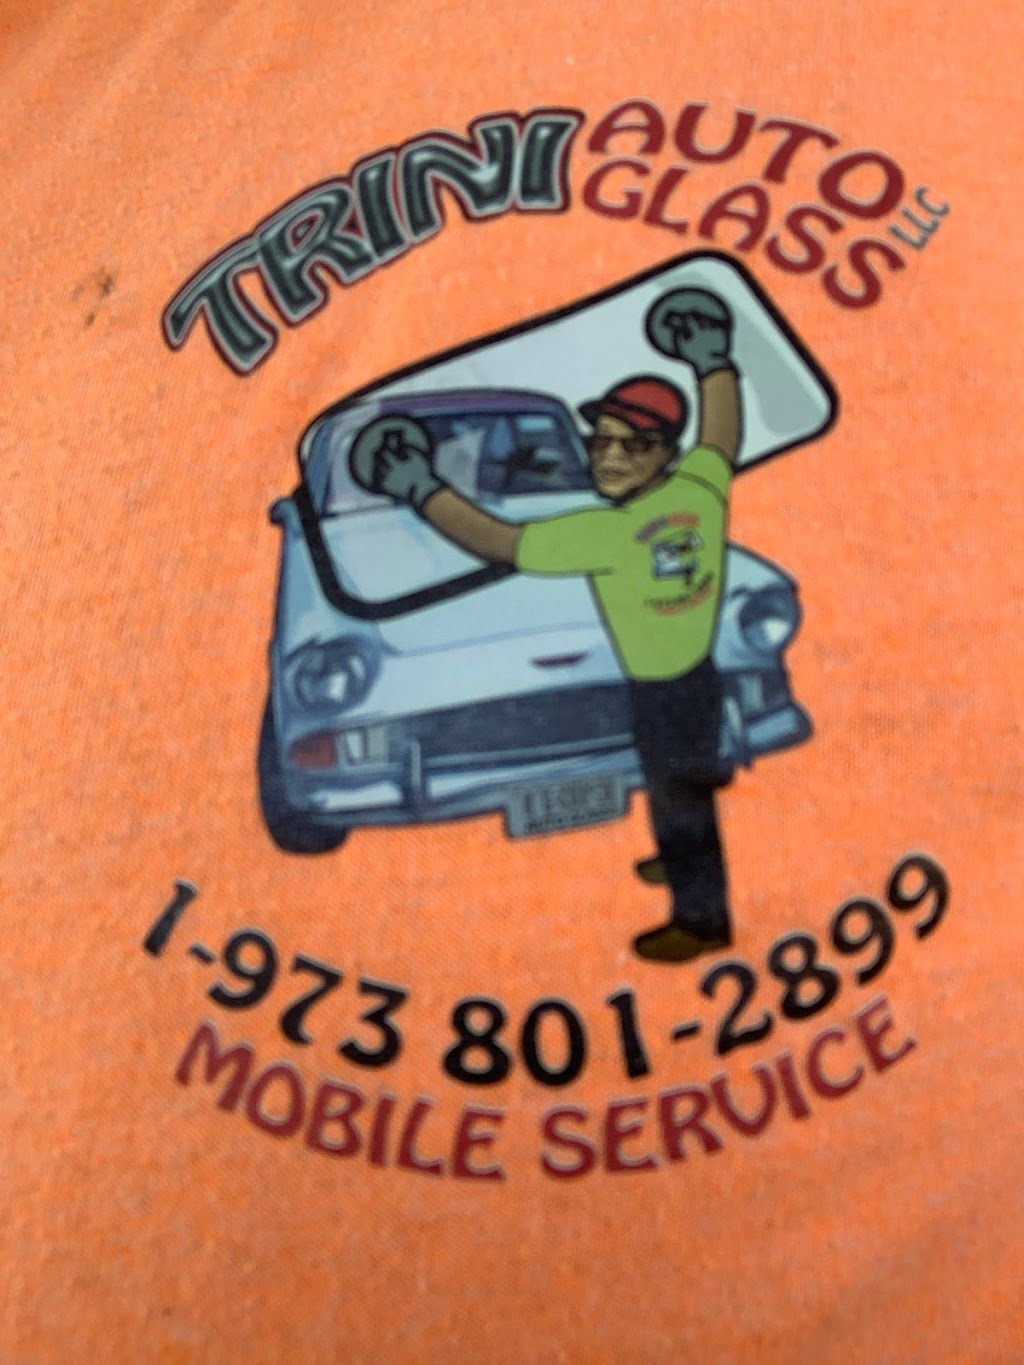 Trini Auto Glass Llc | Hillside, NJ 07205 | Phone: (973) 801-2899